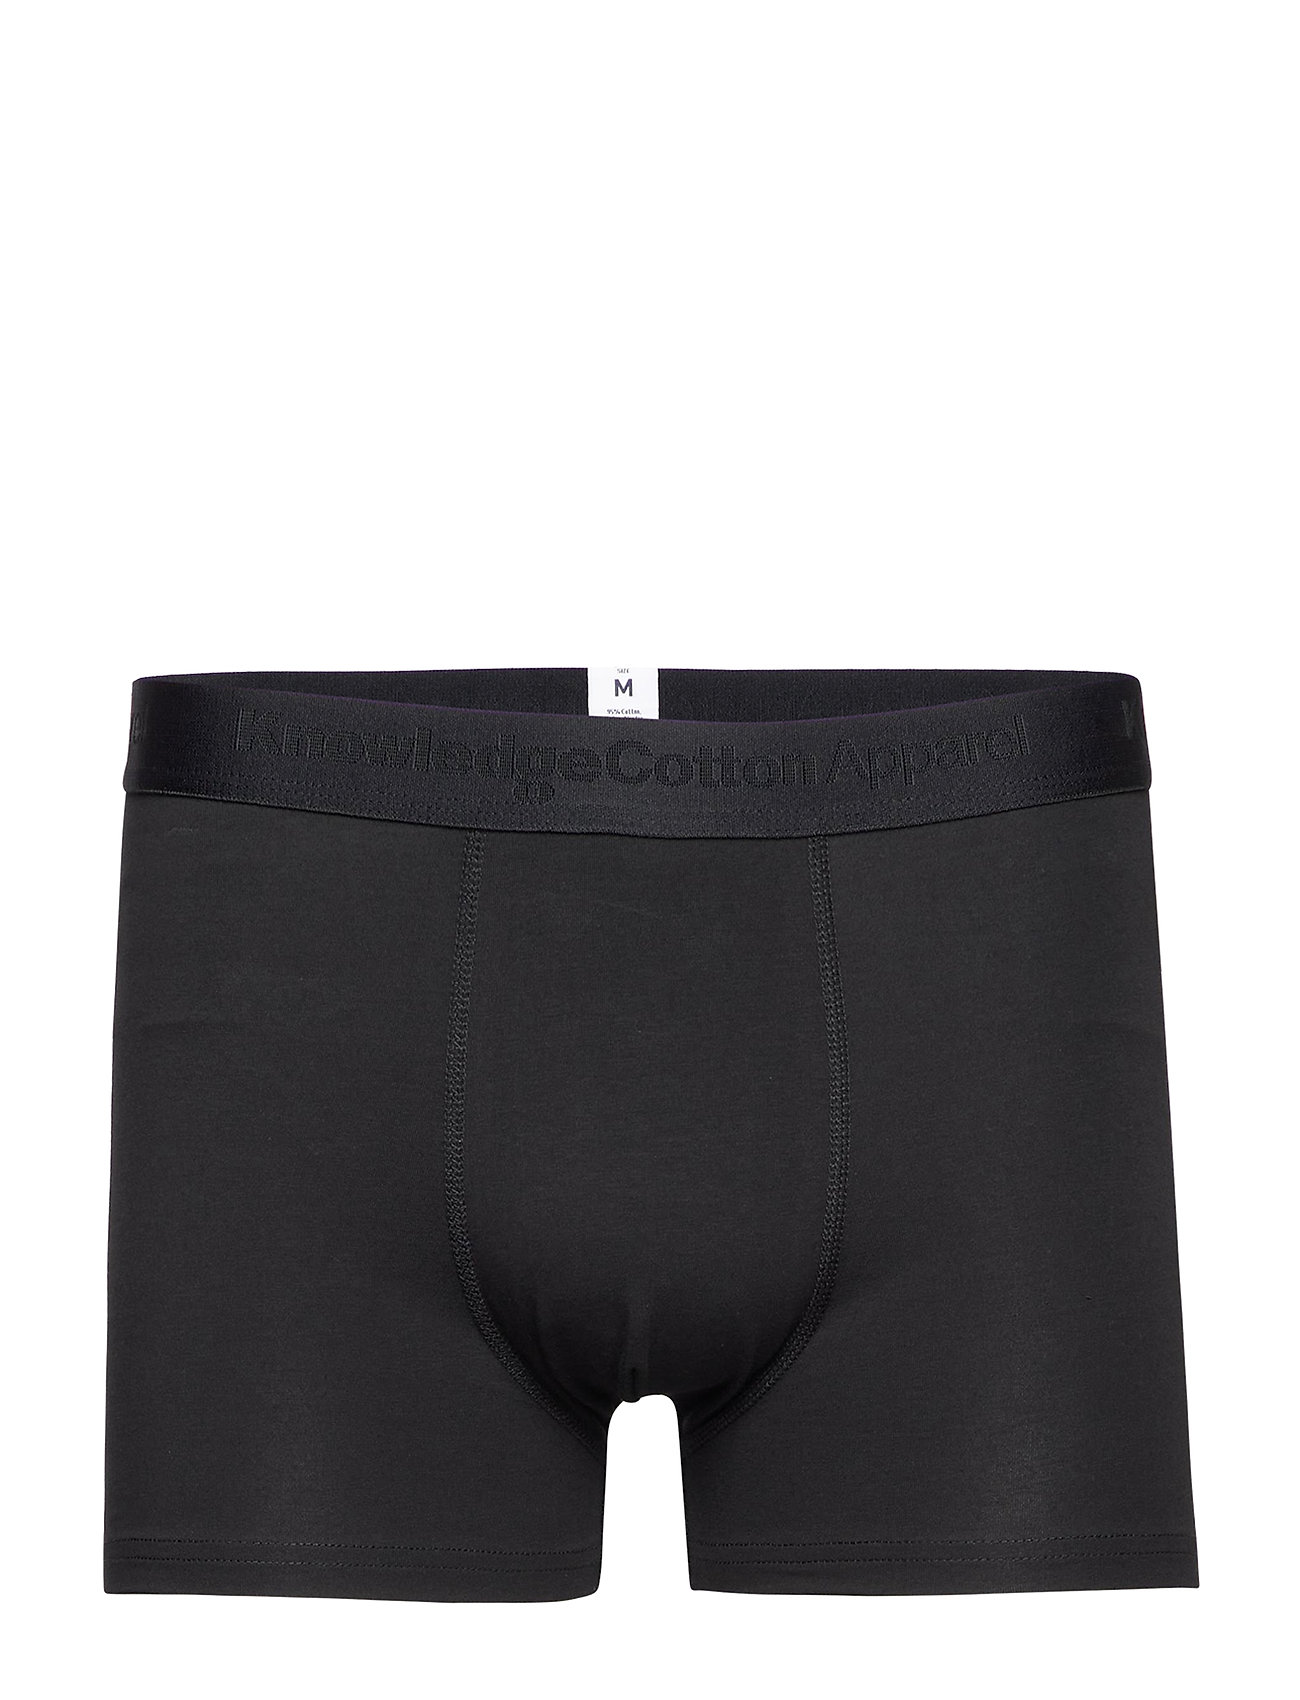 Knowledge Cotton Apparel - 6-pack underwear - GOTS/Vegan - multipack underpants - black jet - 2